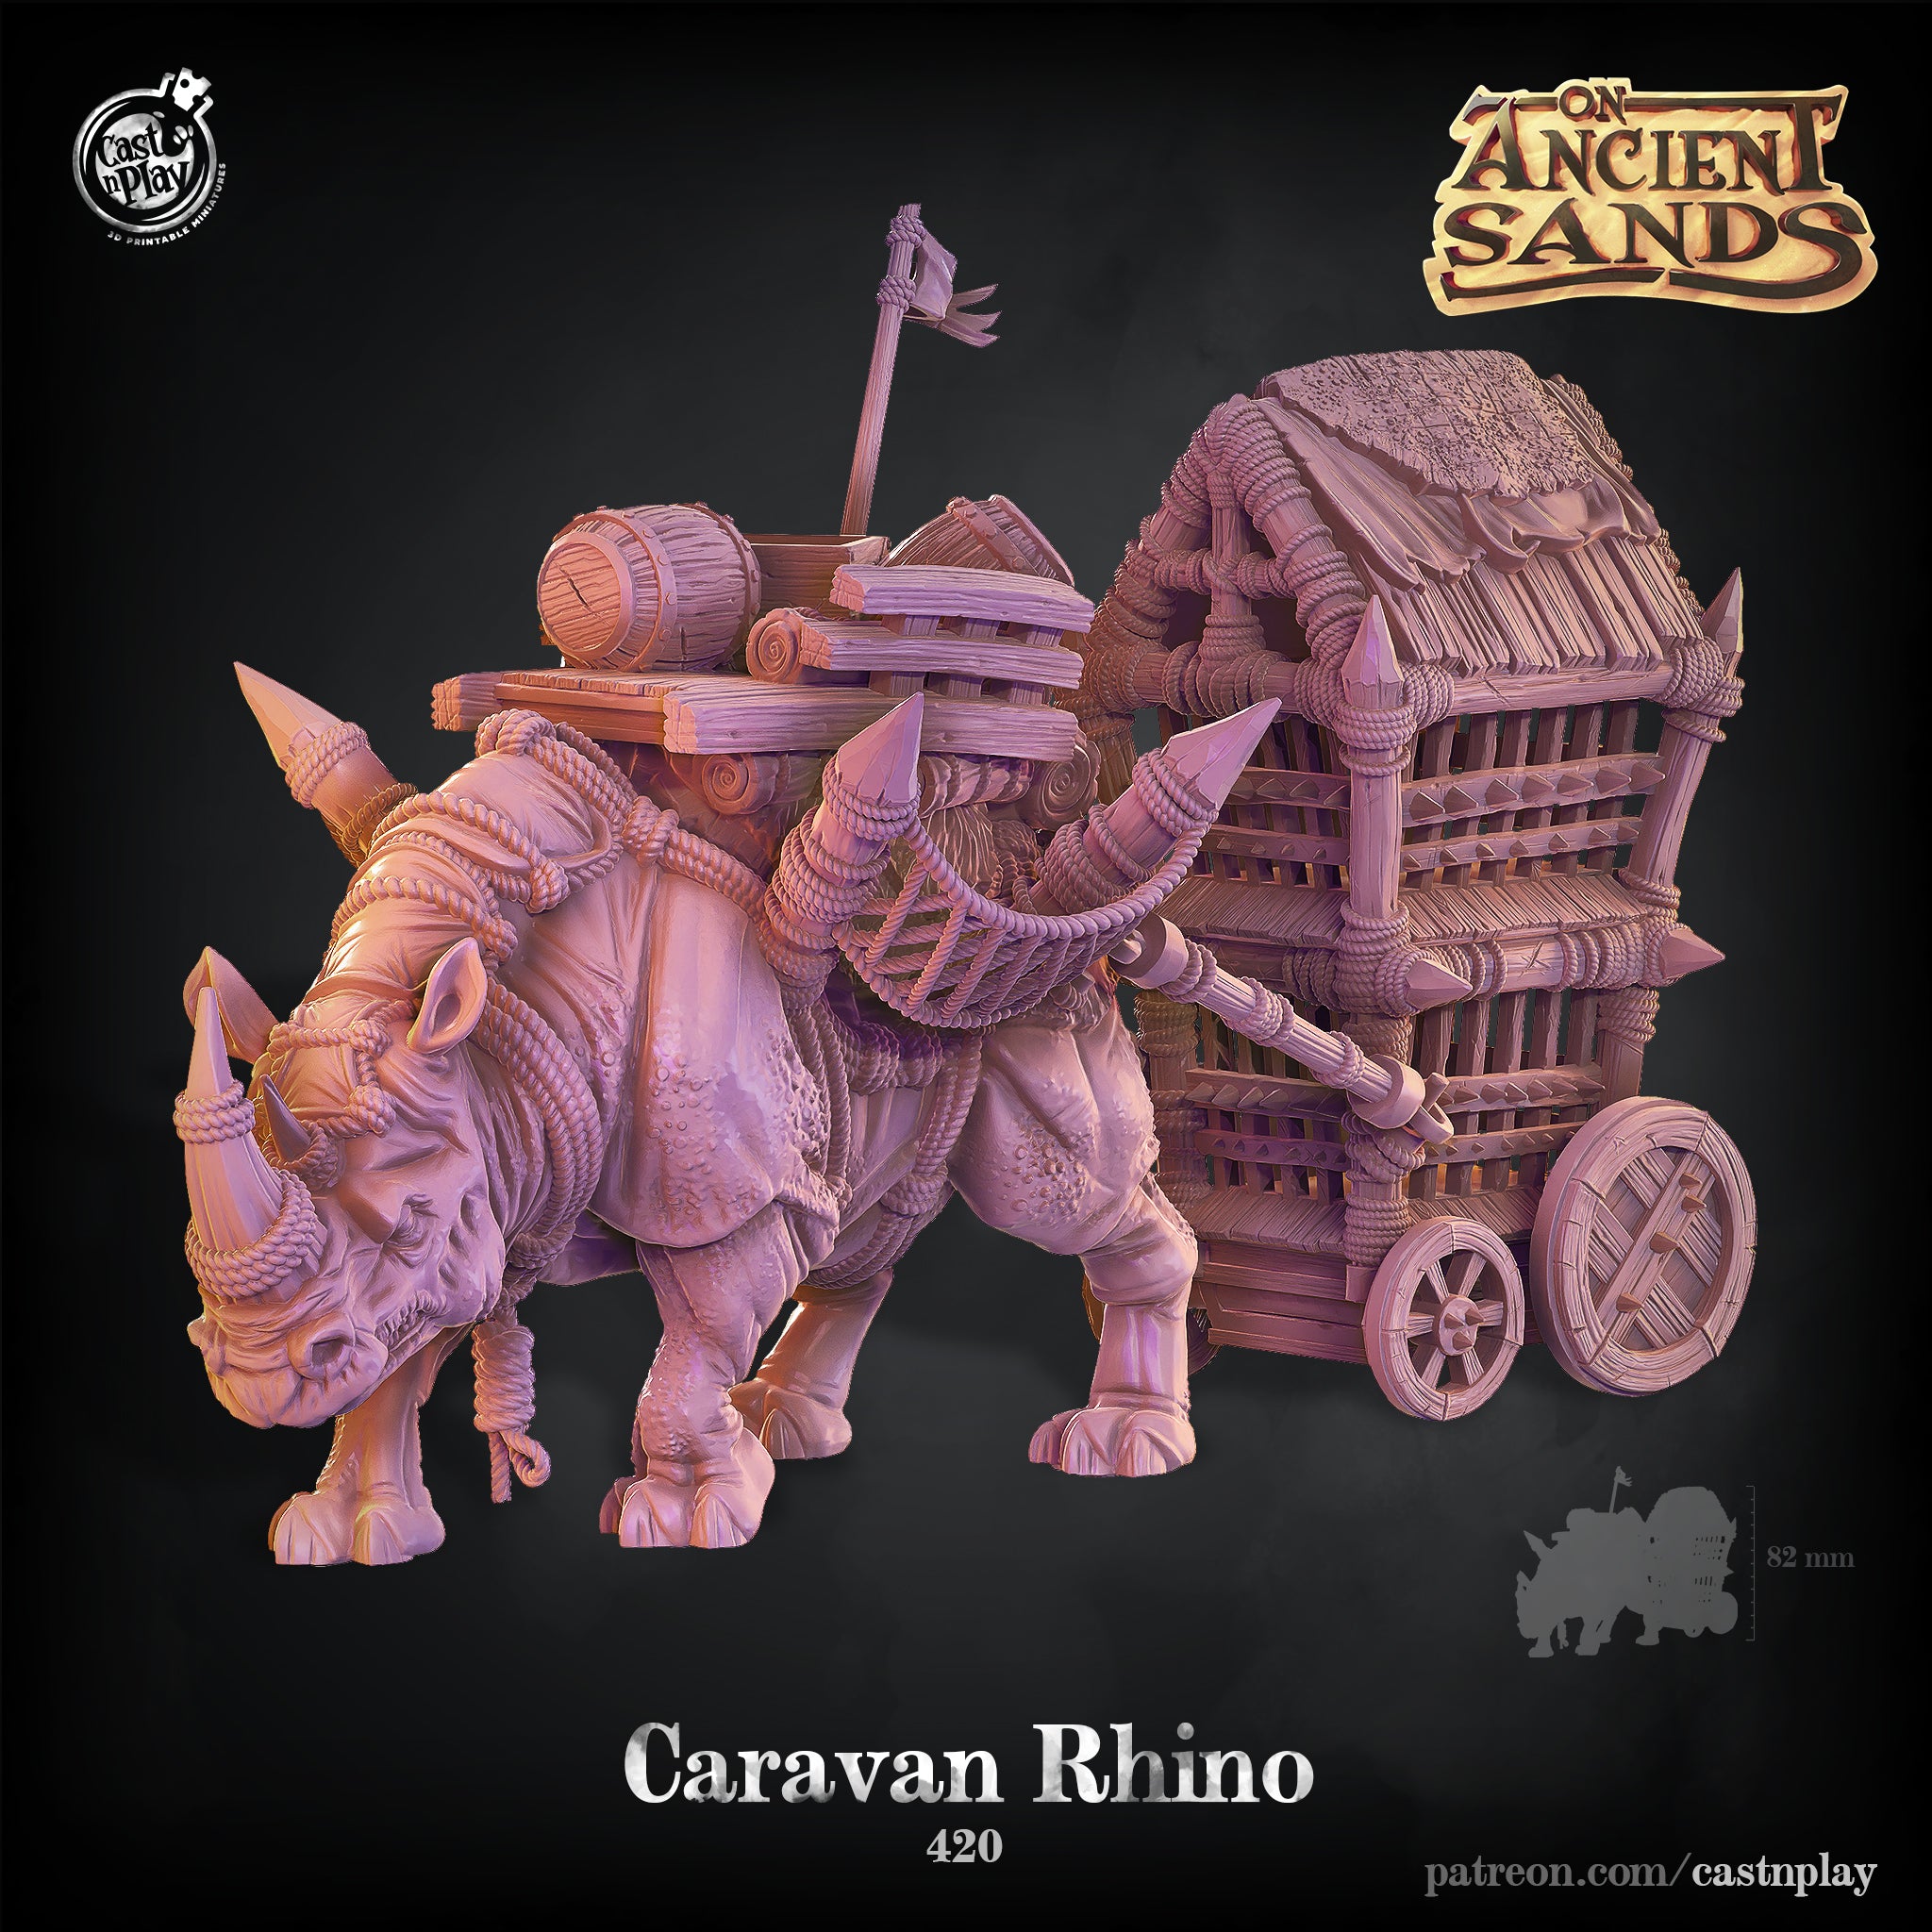 Rhino with armor pulling a caravan